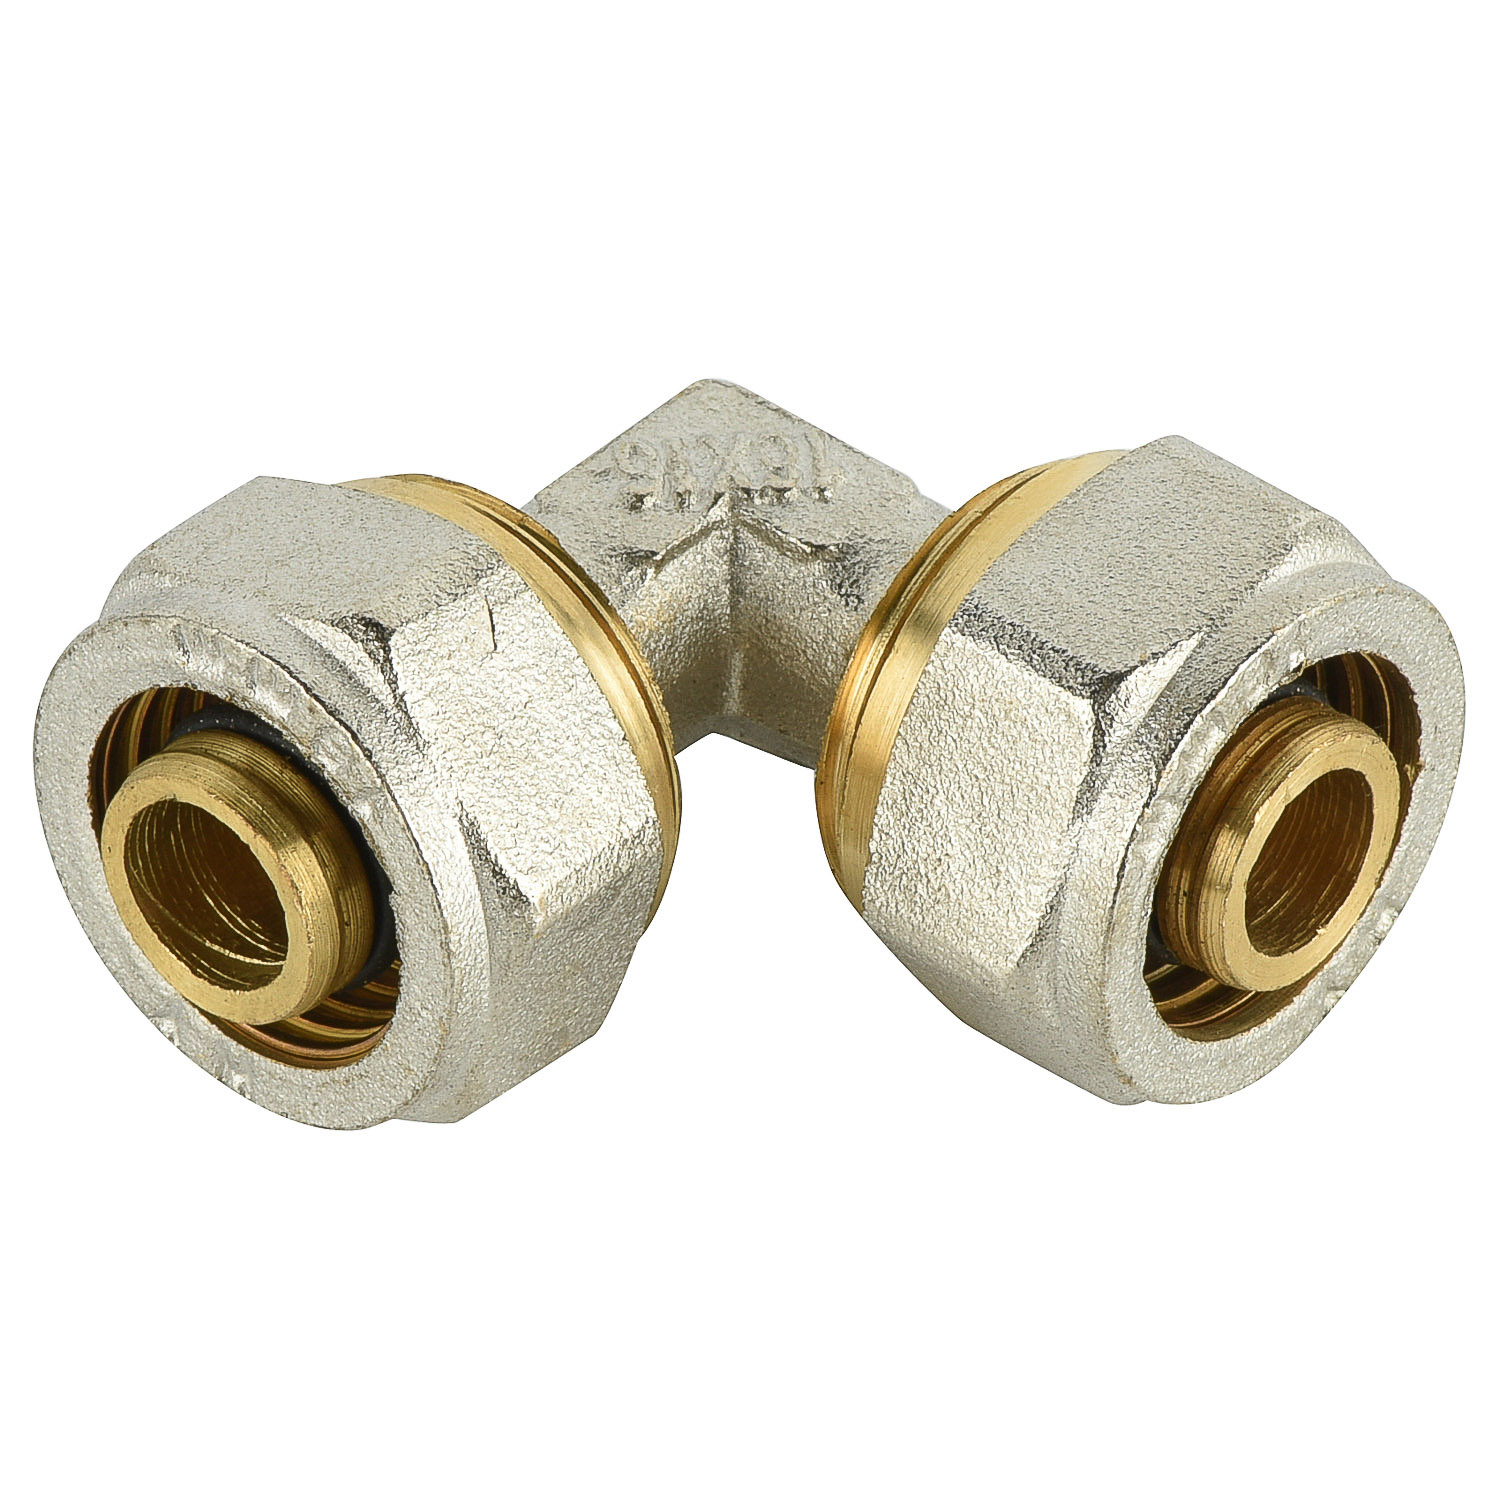 pex-al-pex pipe fittings double color brass Elbow compression fittings for pex-al-pex pipe